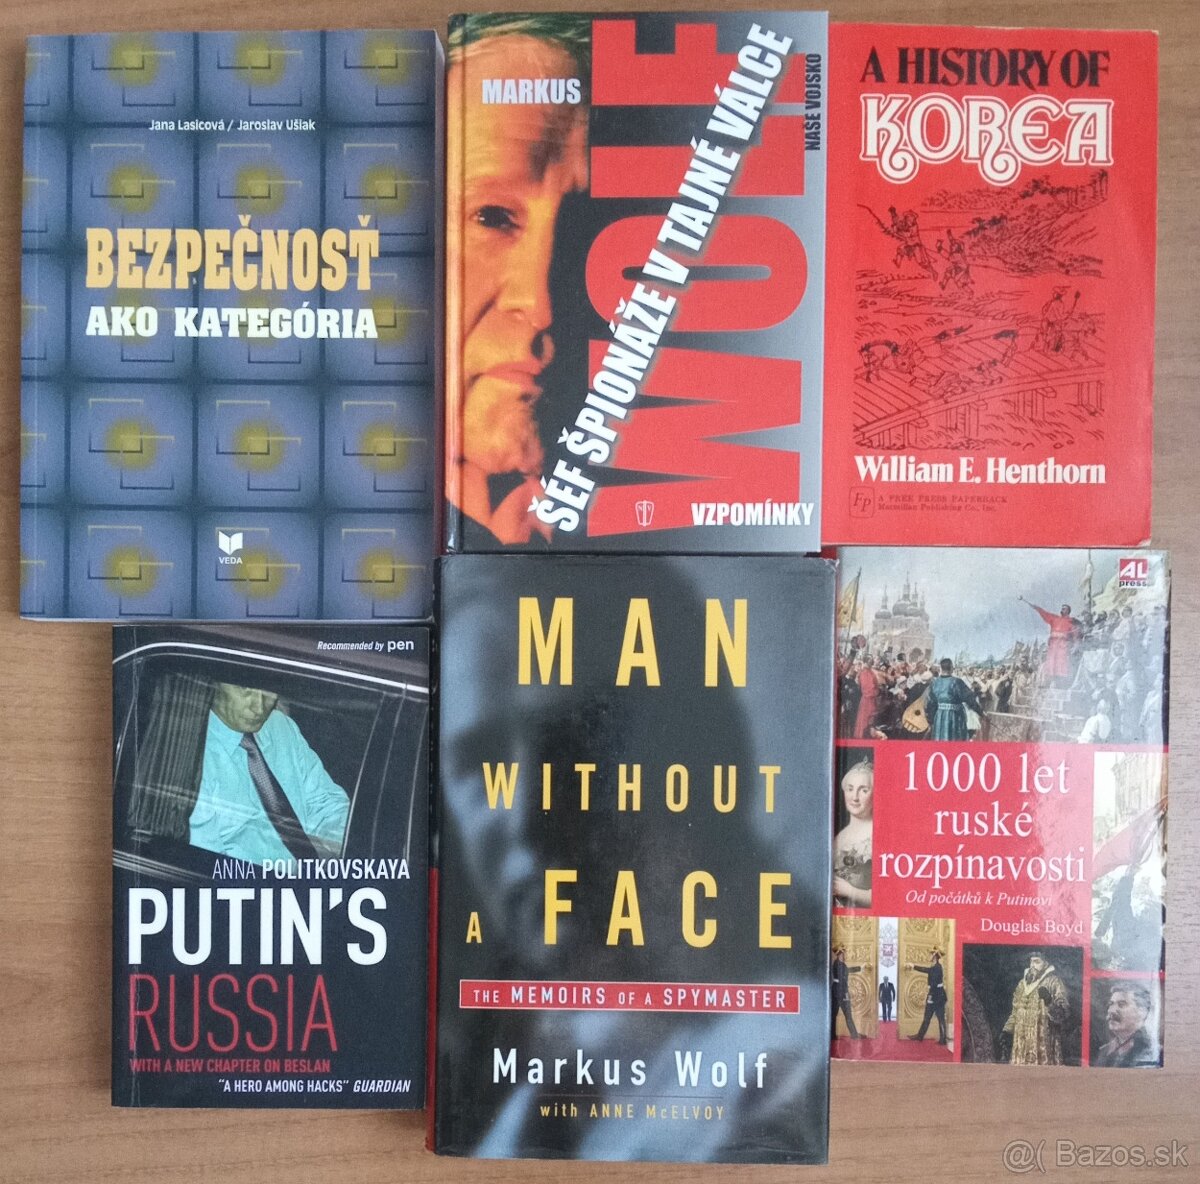 HISTORIA Wolf, Lasicová,Ušiak, Henthorn, Politkovskaya, Boyd